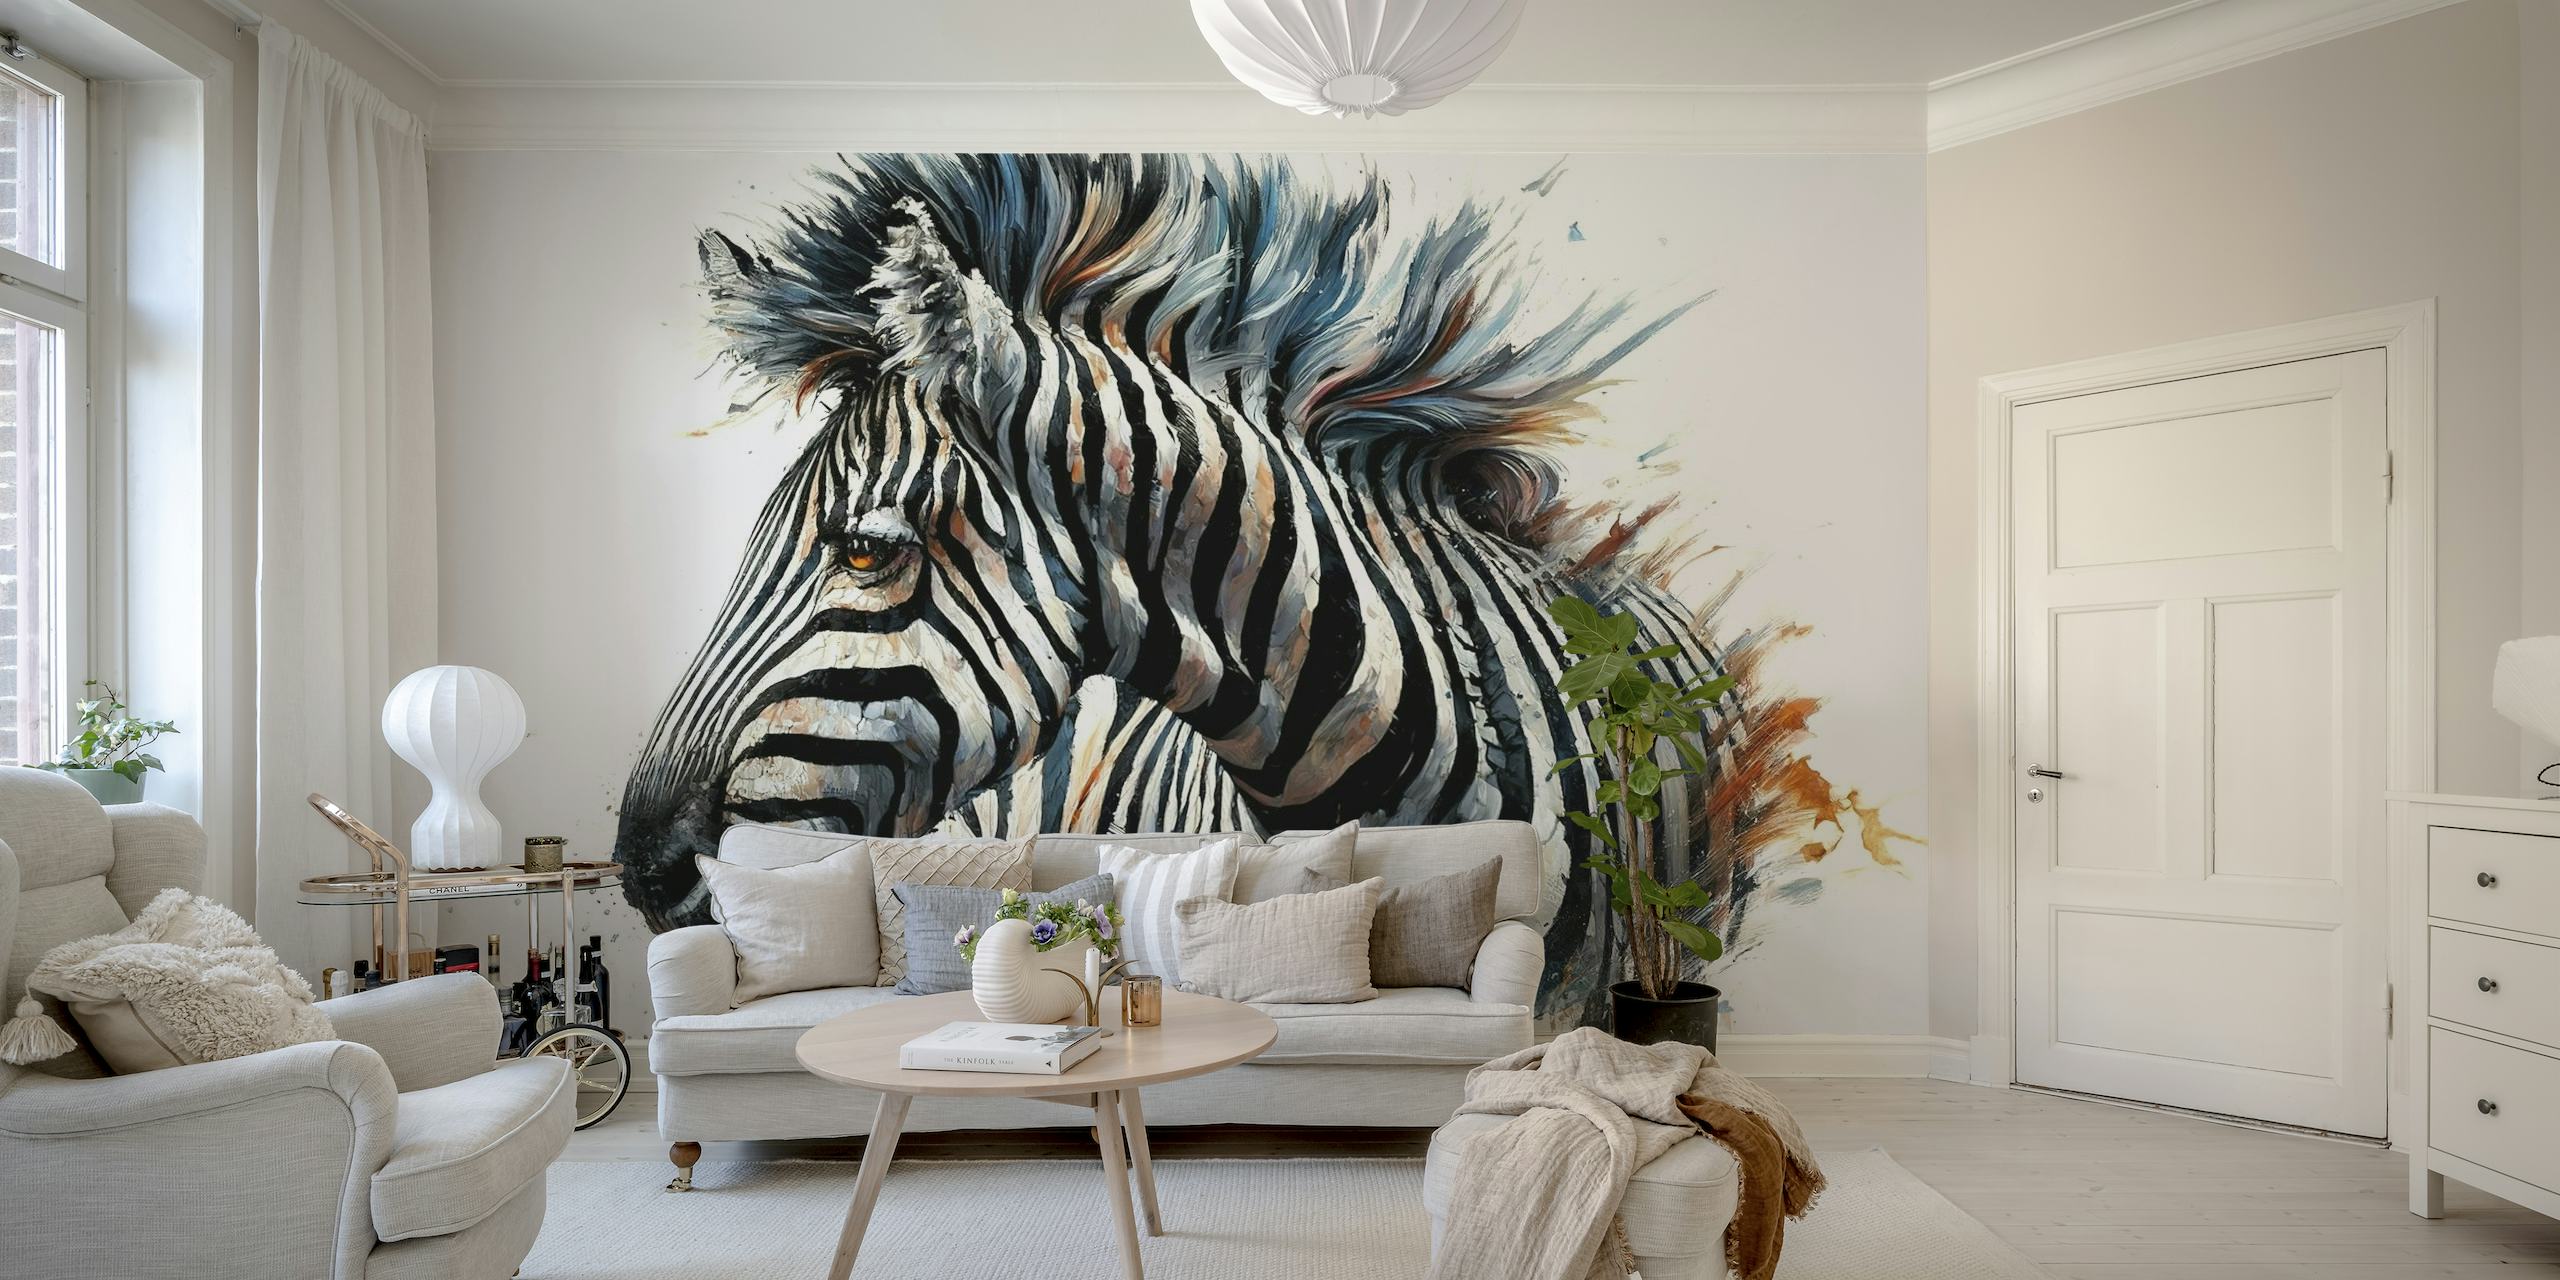 Ethereal Zebra in a Watercolor Dream wallpaper